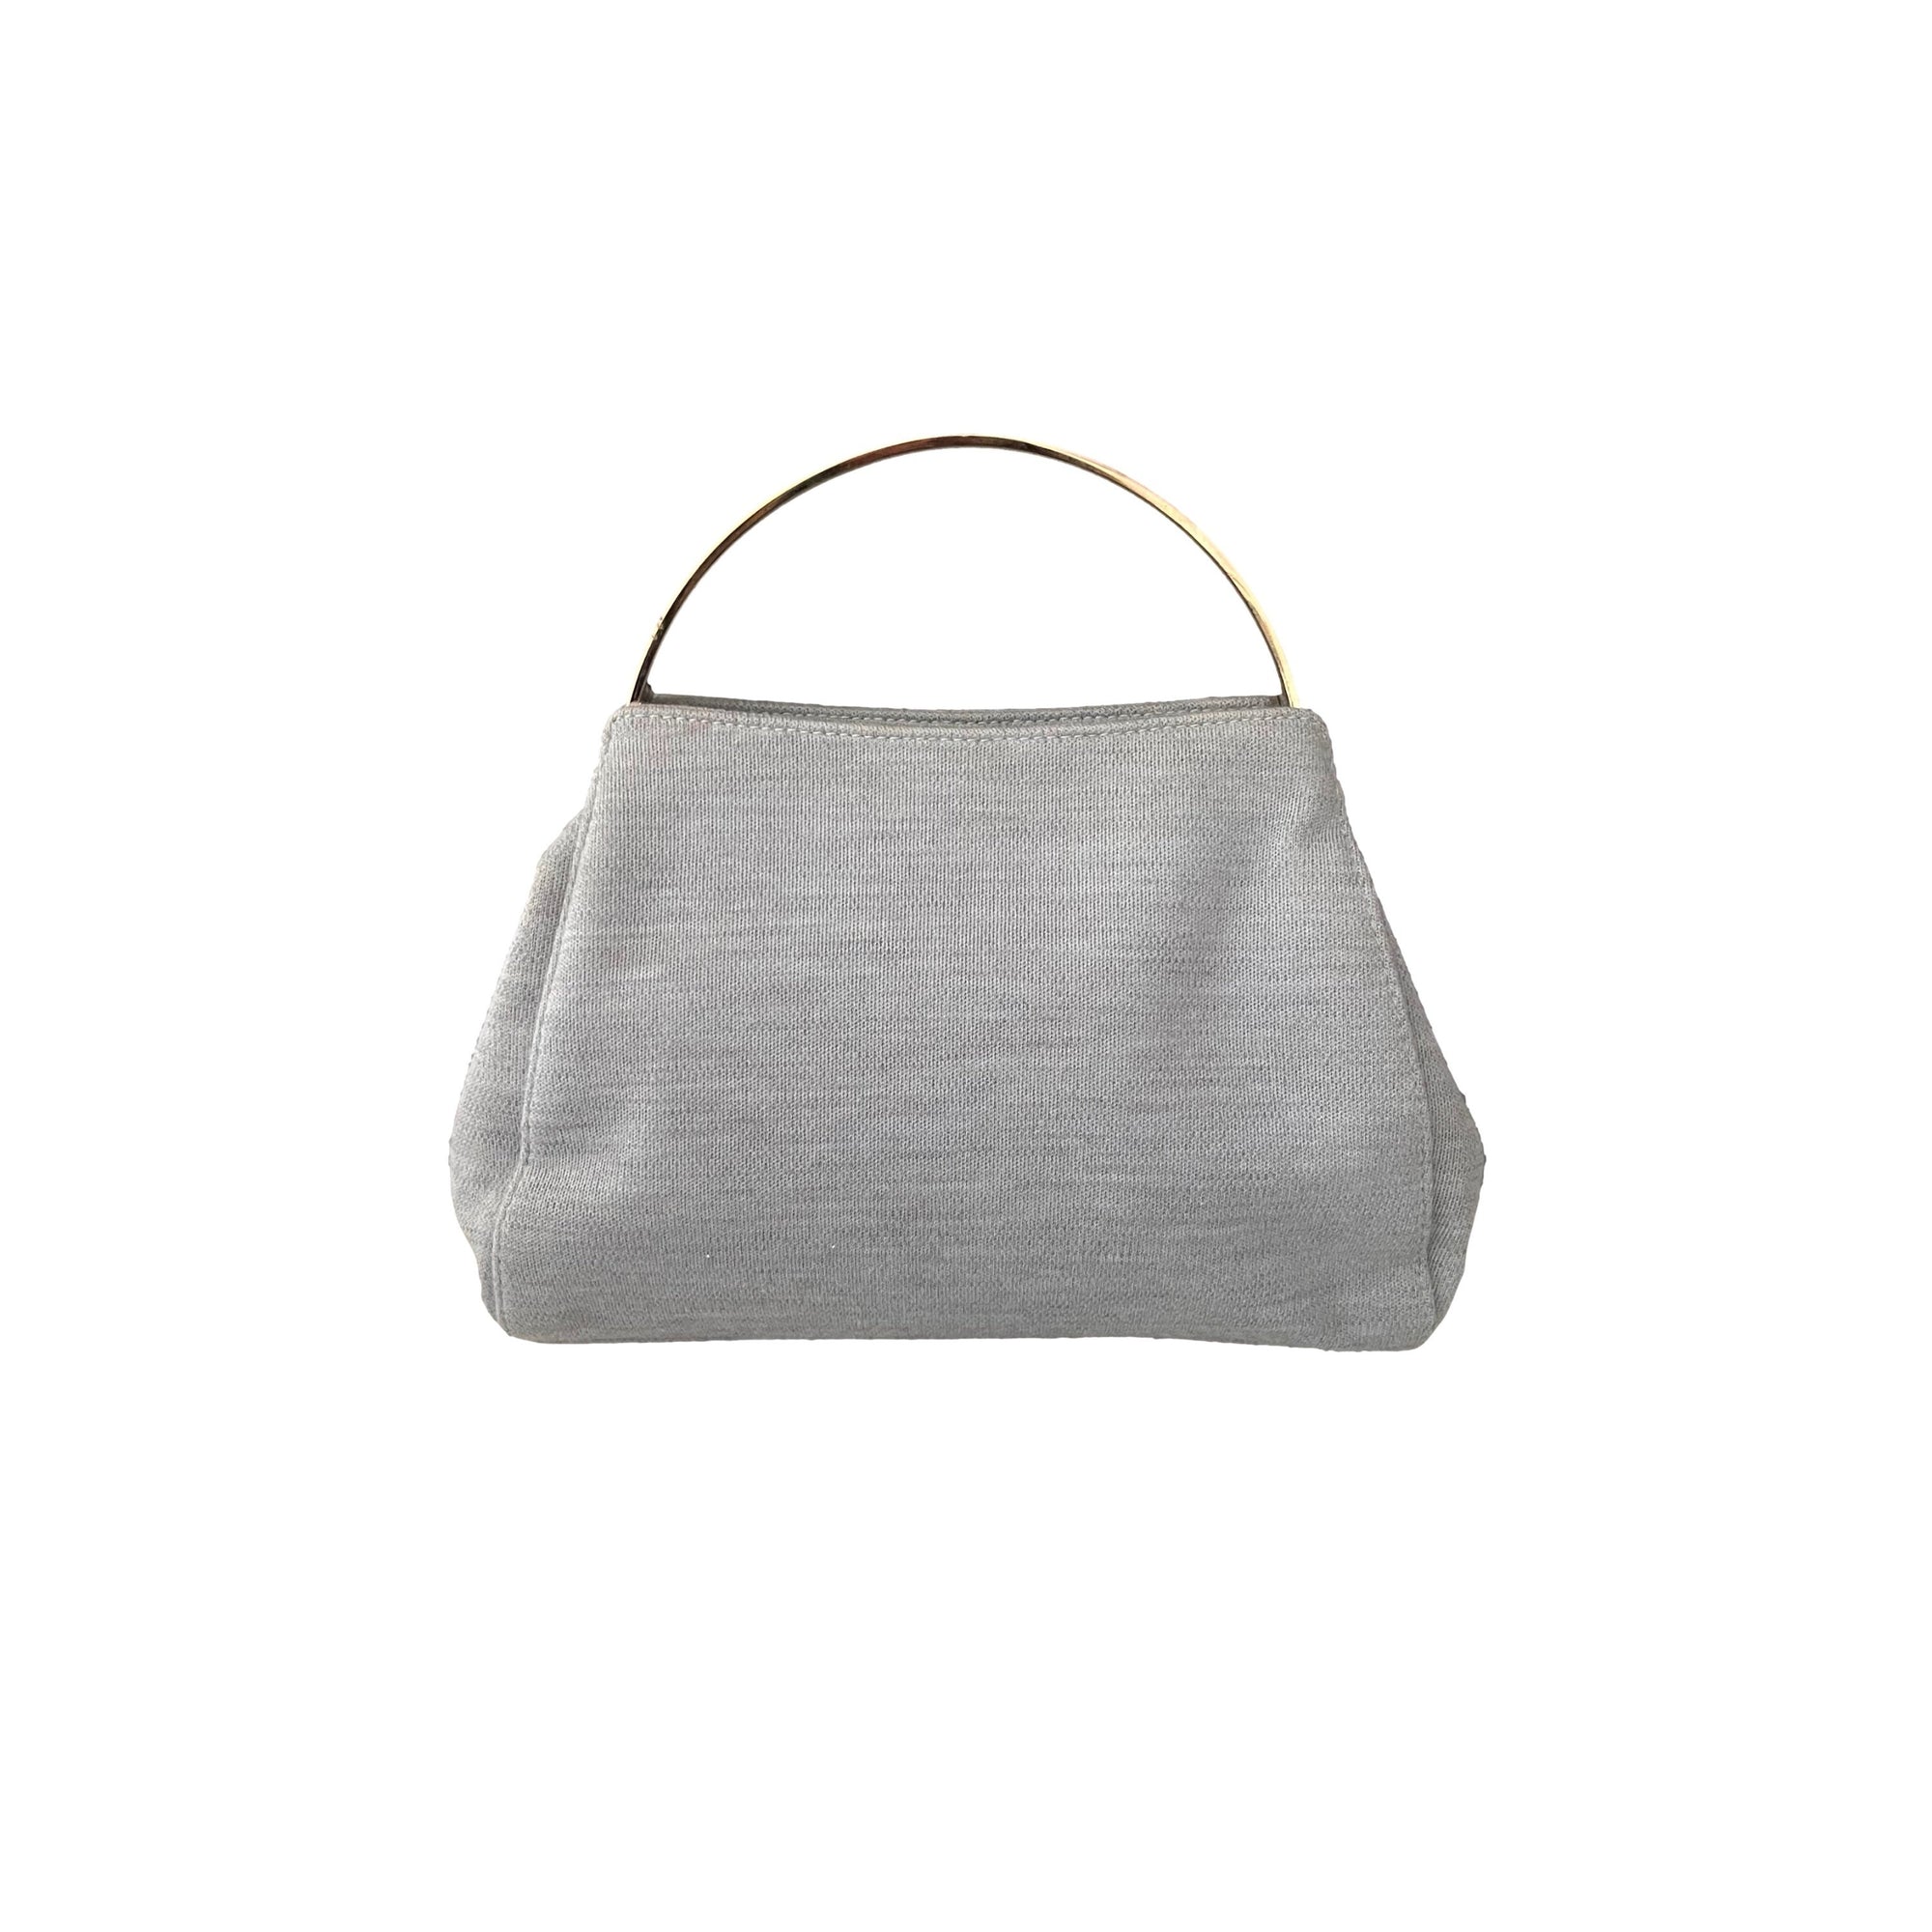 Chanel Grey Mini Metal Top Handle Bag - Handbags